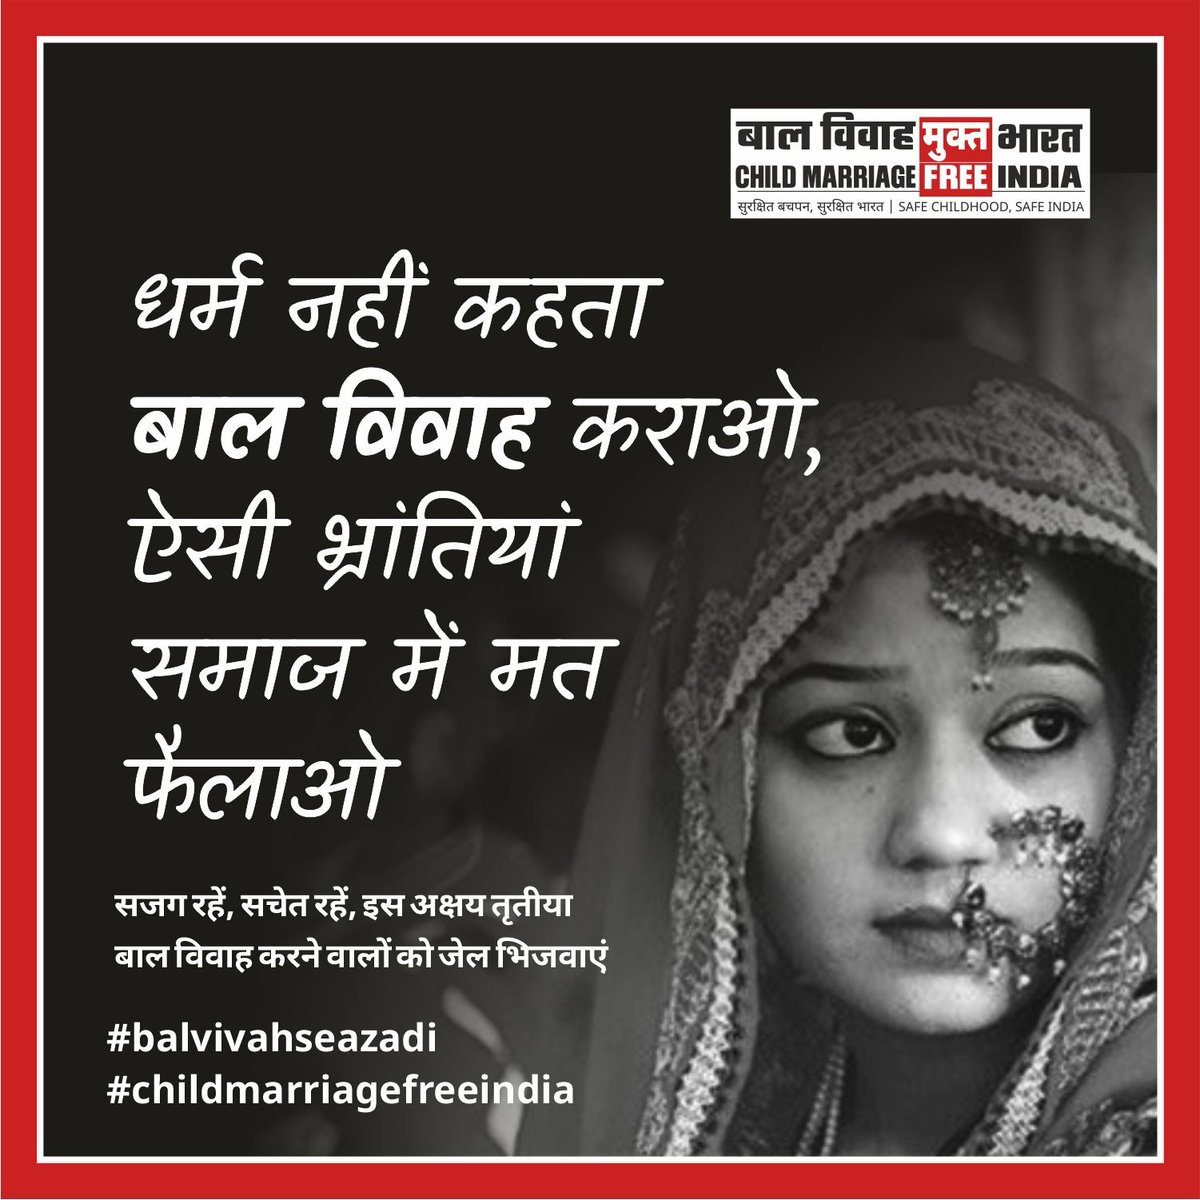 धर्म नहीं कहता
बाल विवाह कराओ,
ऐसी भ्रांतिया
समाज मे मत फैलाओ
#AkshayaTritiya
#ChildMarriageFreeIndia
#Balvivahseazadi